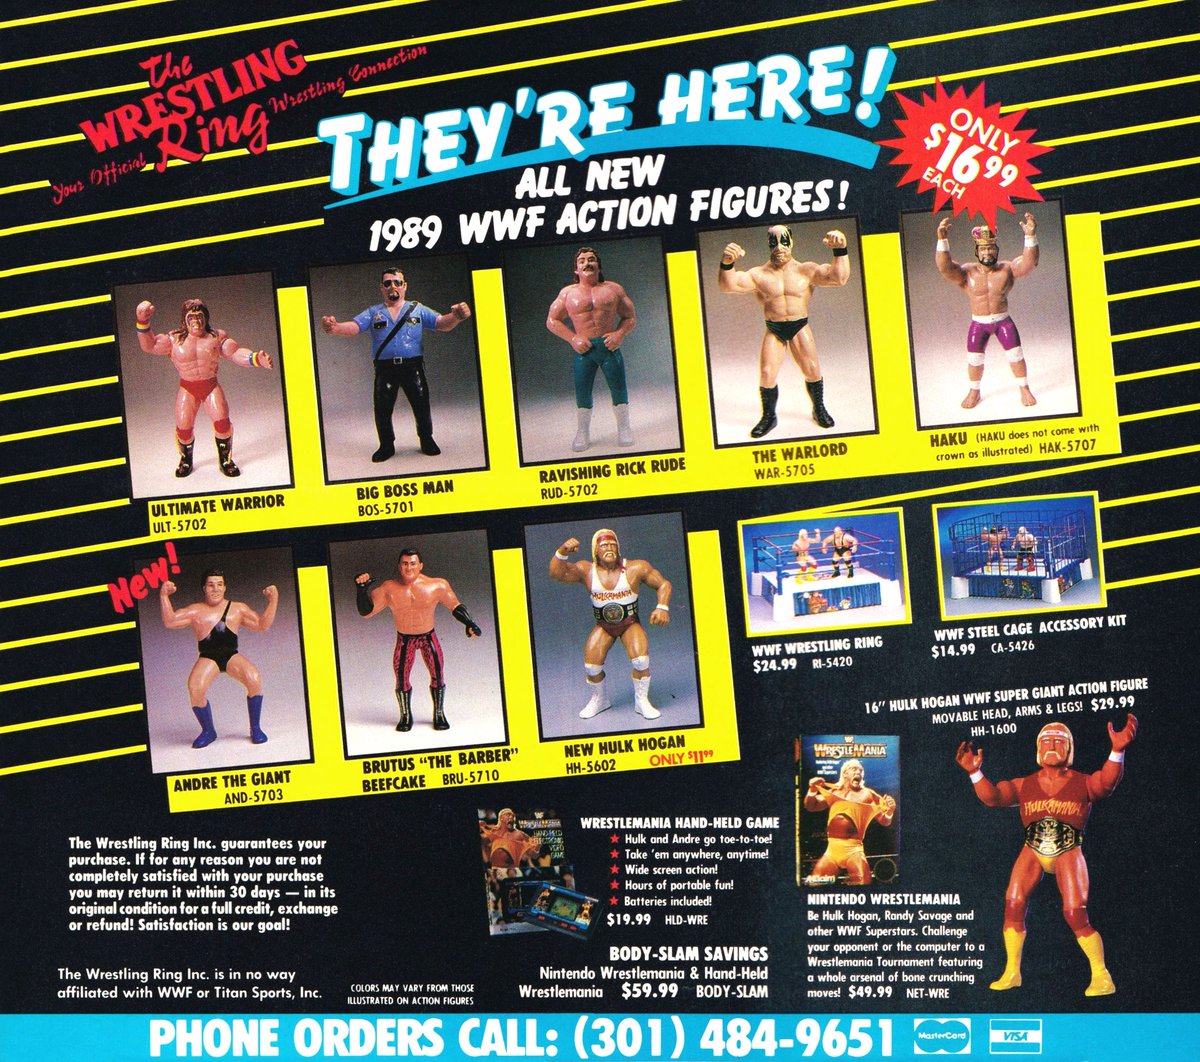 All New 1989 WWF Action Figures! ⭐ #WWF #WWE #Wrestling #UltimateWarrior #BigBossMan #RickRude #Warlord #Haku #AndreTheGiant #BrutusBeefcake #HulkHogan #LJN